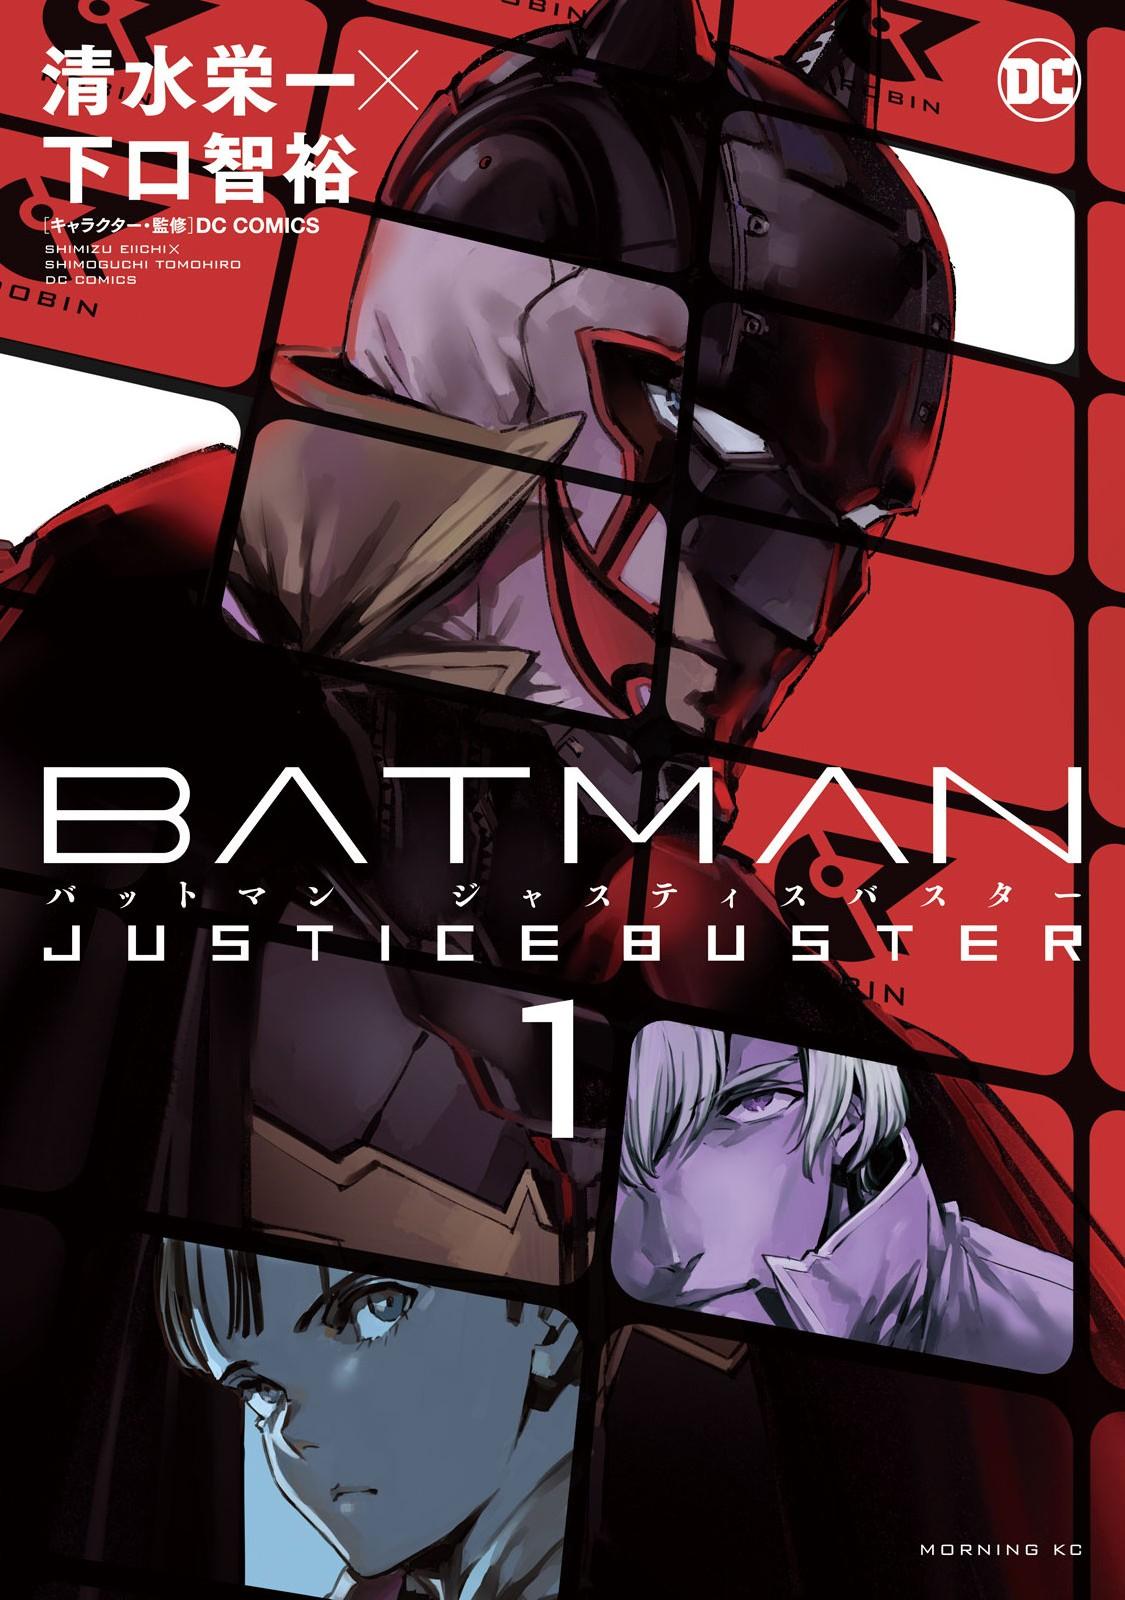 Batman: Justice Buster